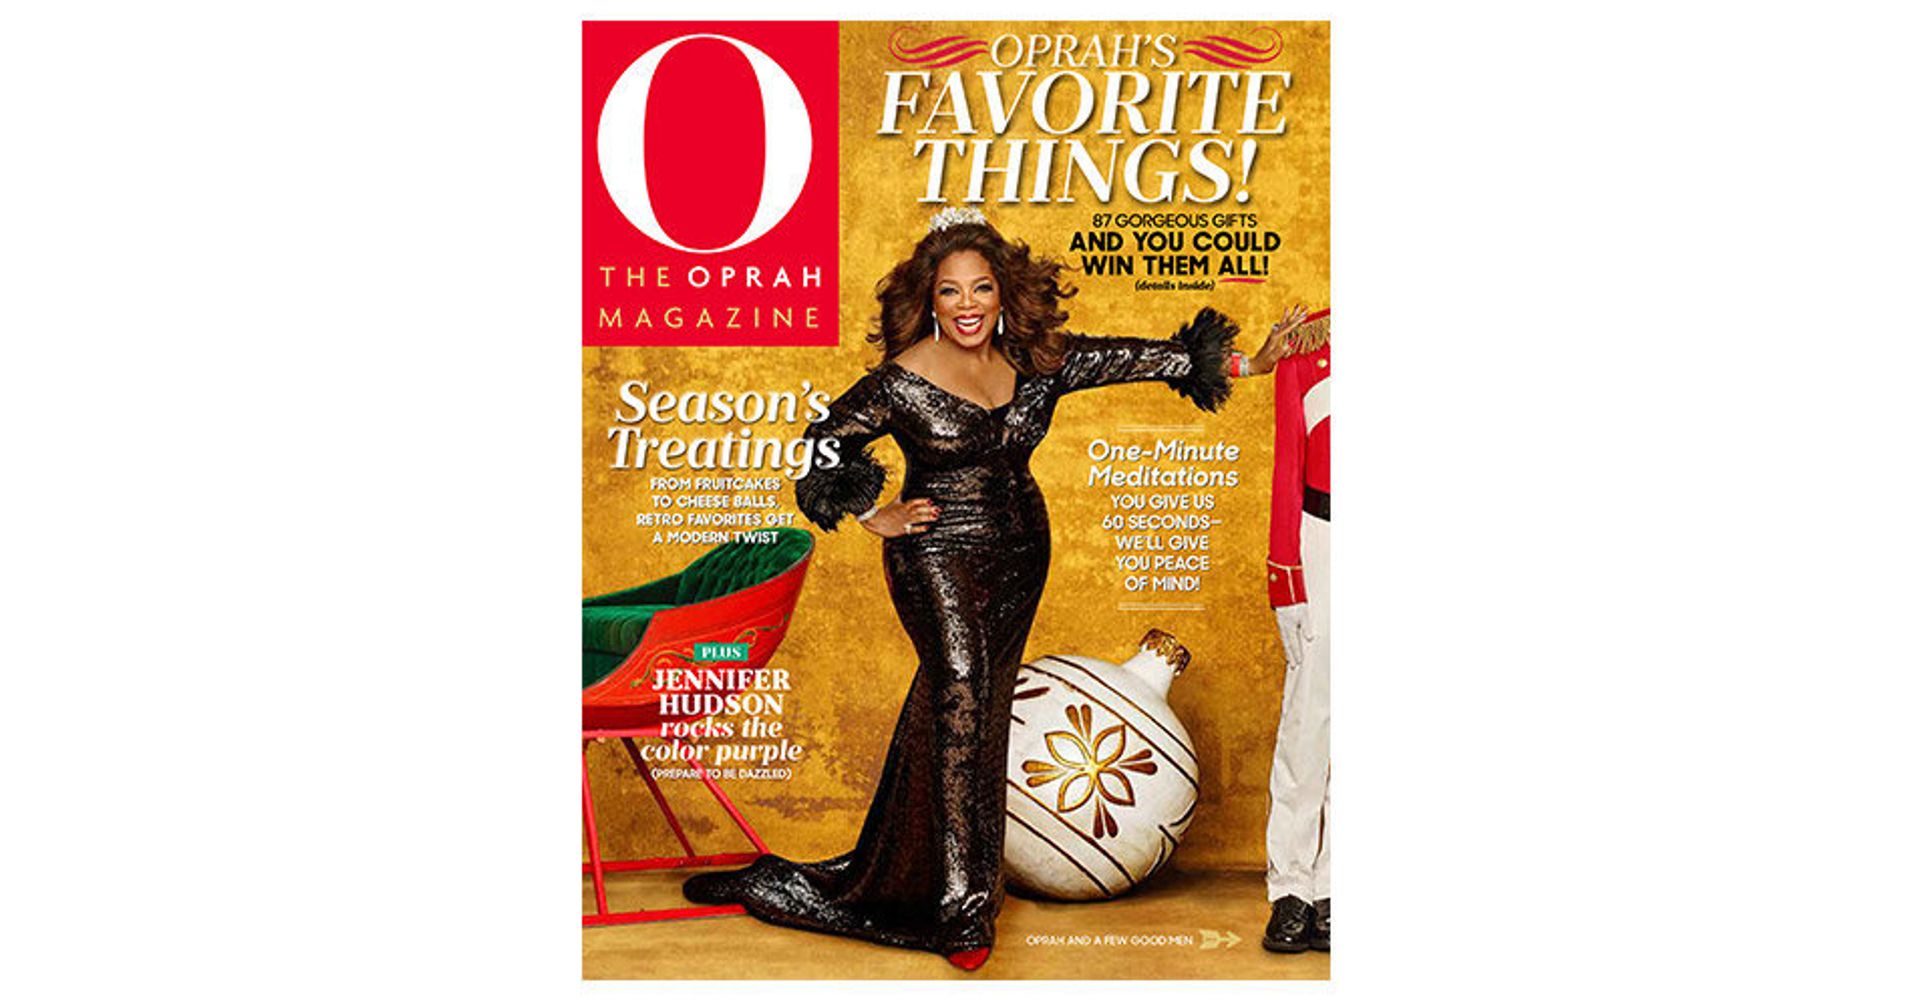 Oprah's Favorite Things 2015 Edition! HuffPost